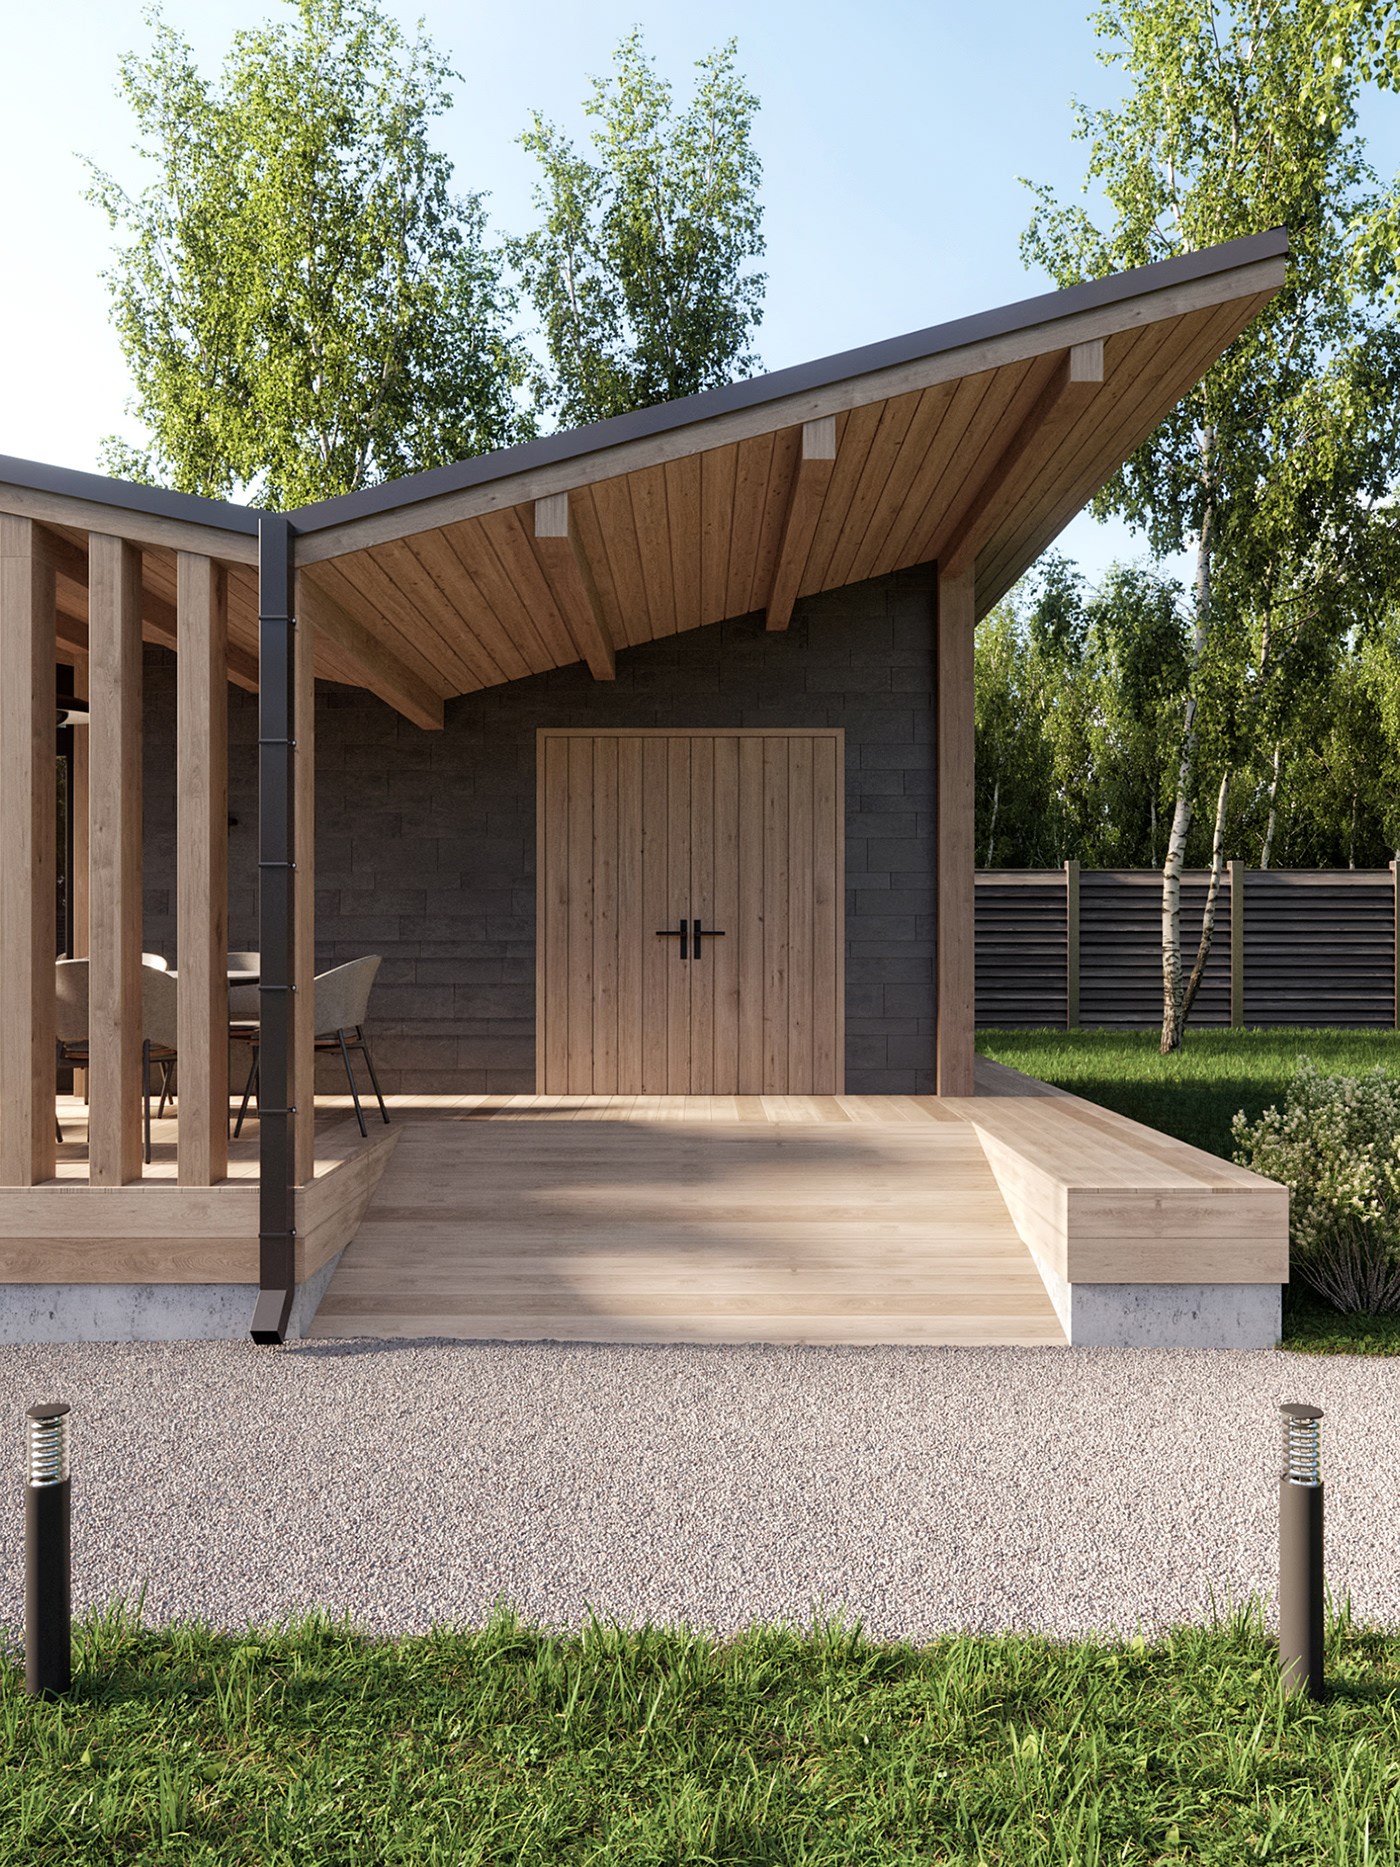 corona render  corona renderer design forest house Interior interior design  Minimalism Render woods